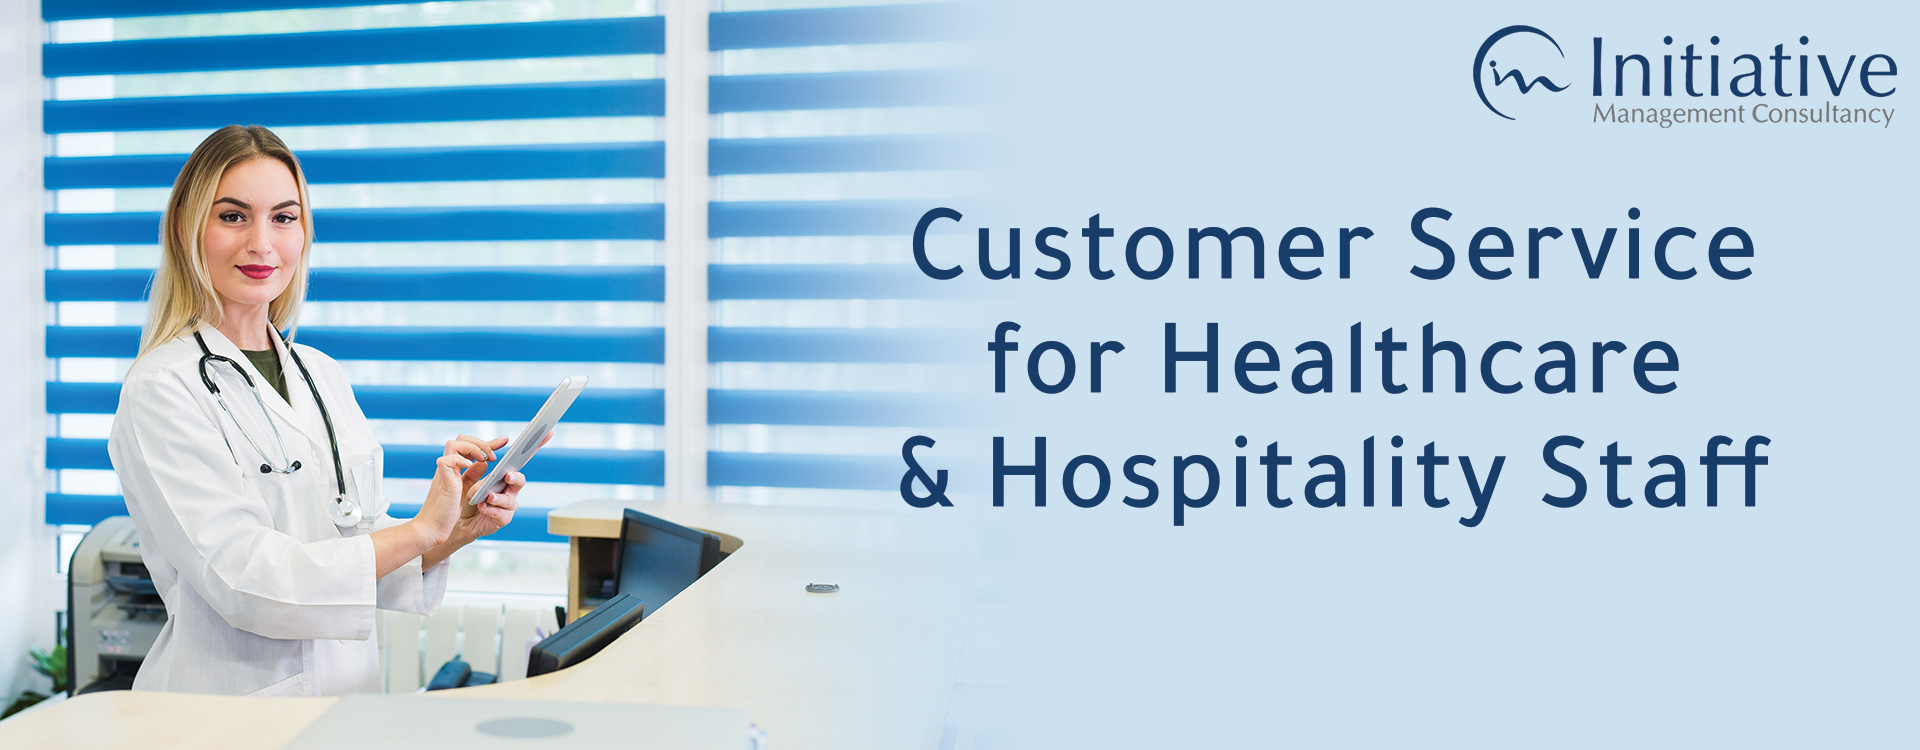 Customer Service for Healthcare & Hospitality Staff